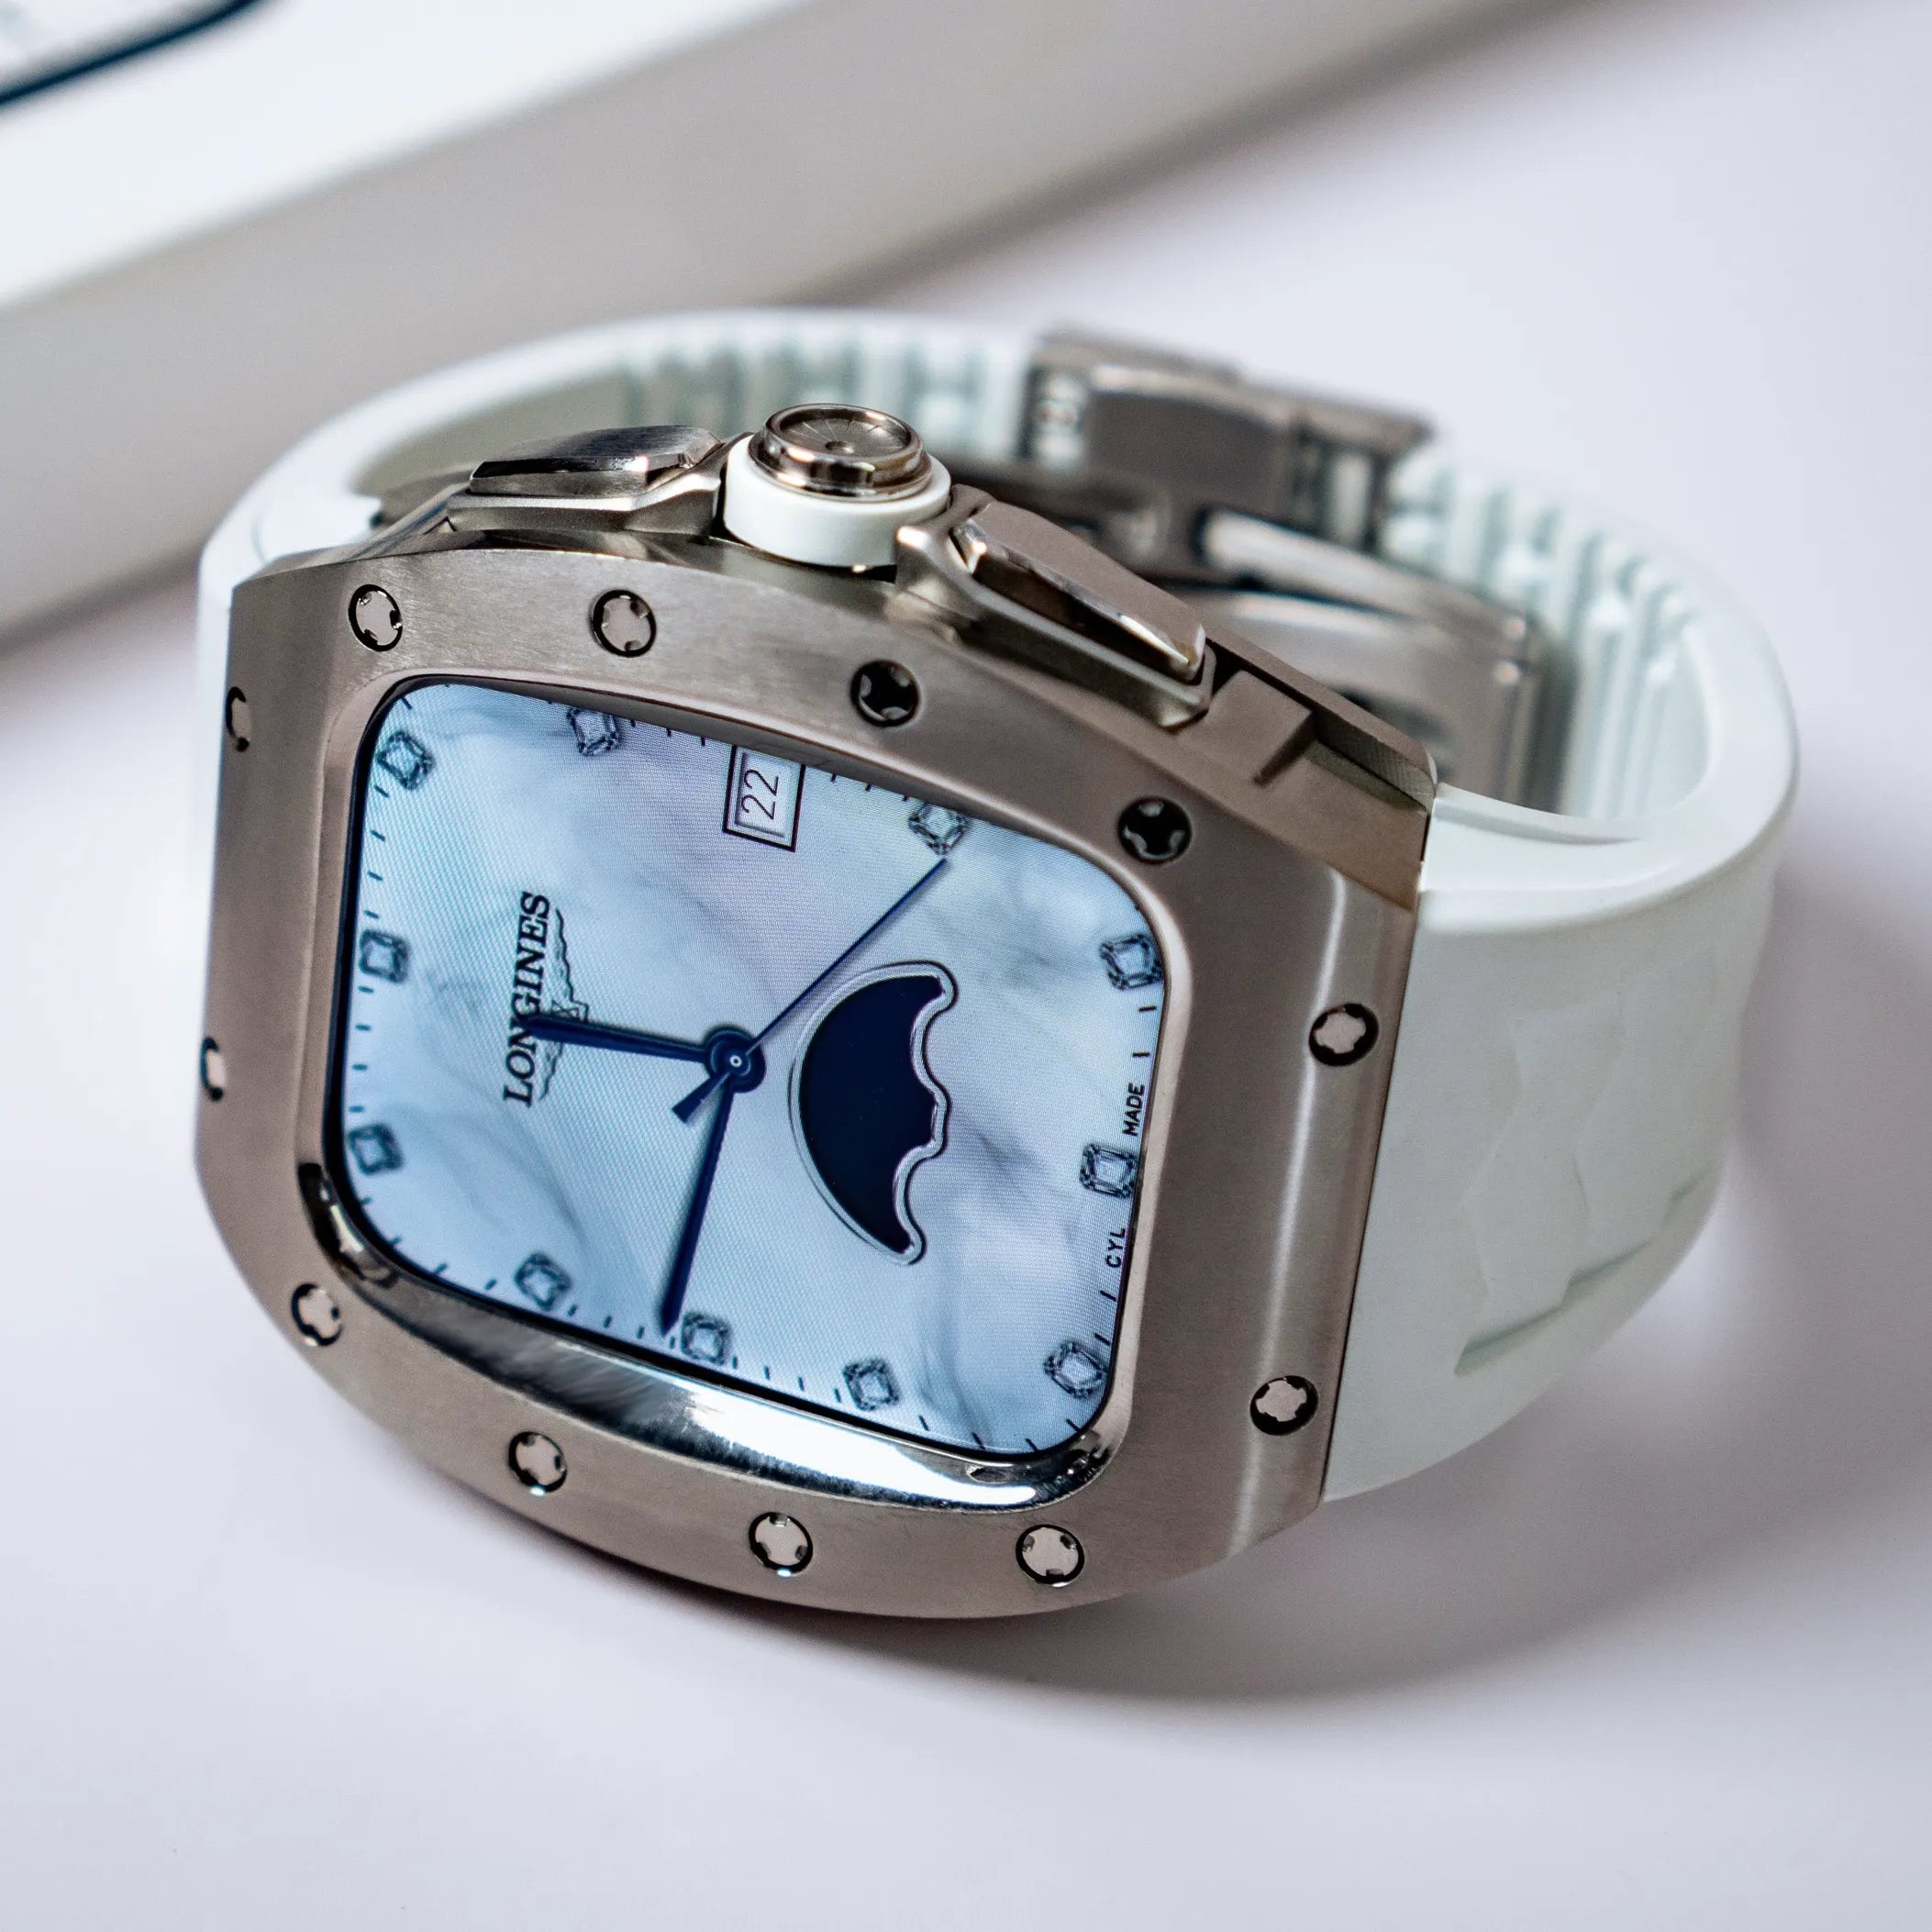 Richard Titanium Apple Watch Case Retrofit Kit